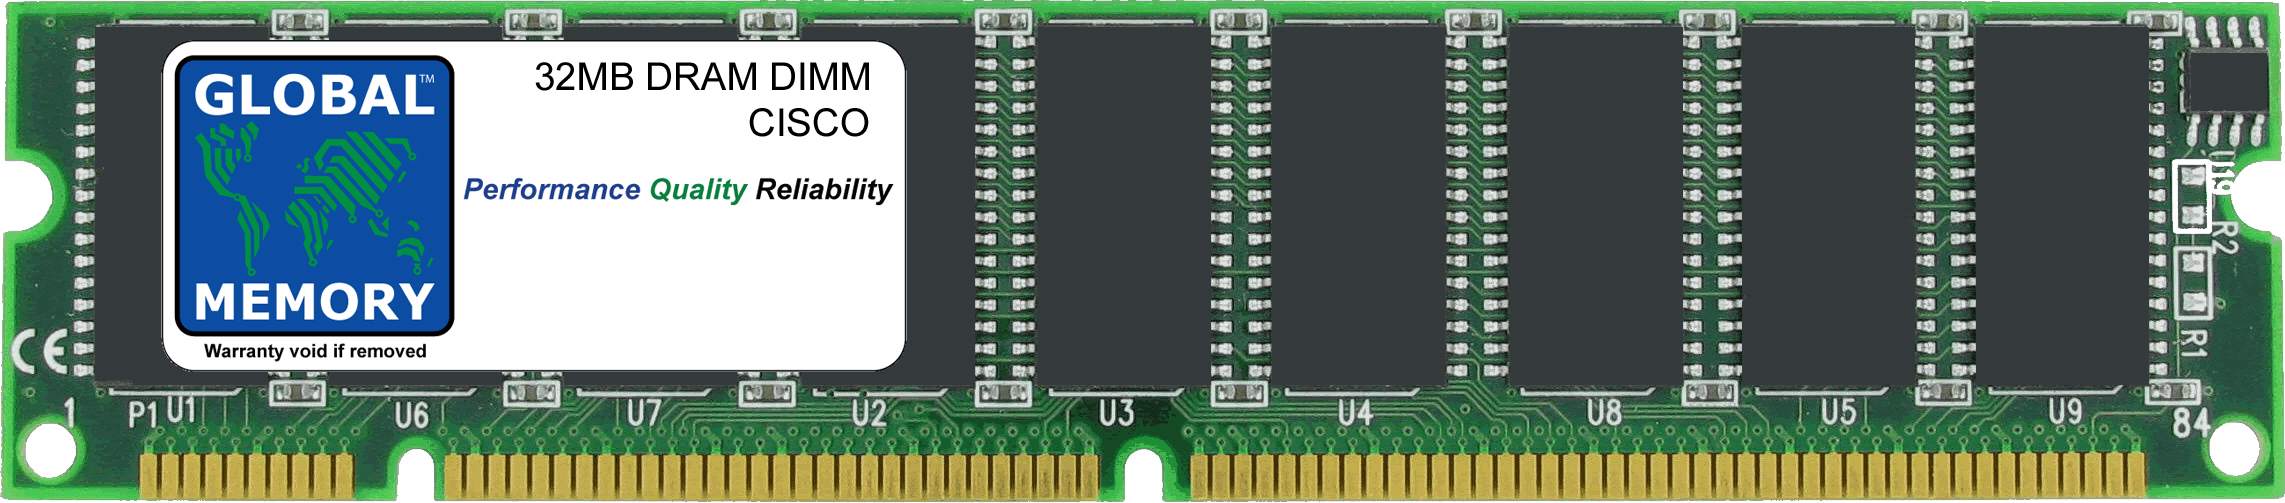 32MB DRAM DIMM MEMORY RAM FOR CISCO ICS 7750 ASI-81/160 , MRP200/300 & MRP3-8FXS/16FS (MEM-MRP-32D) - Click Image to Close